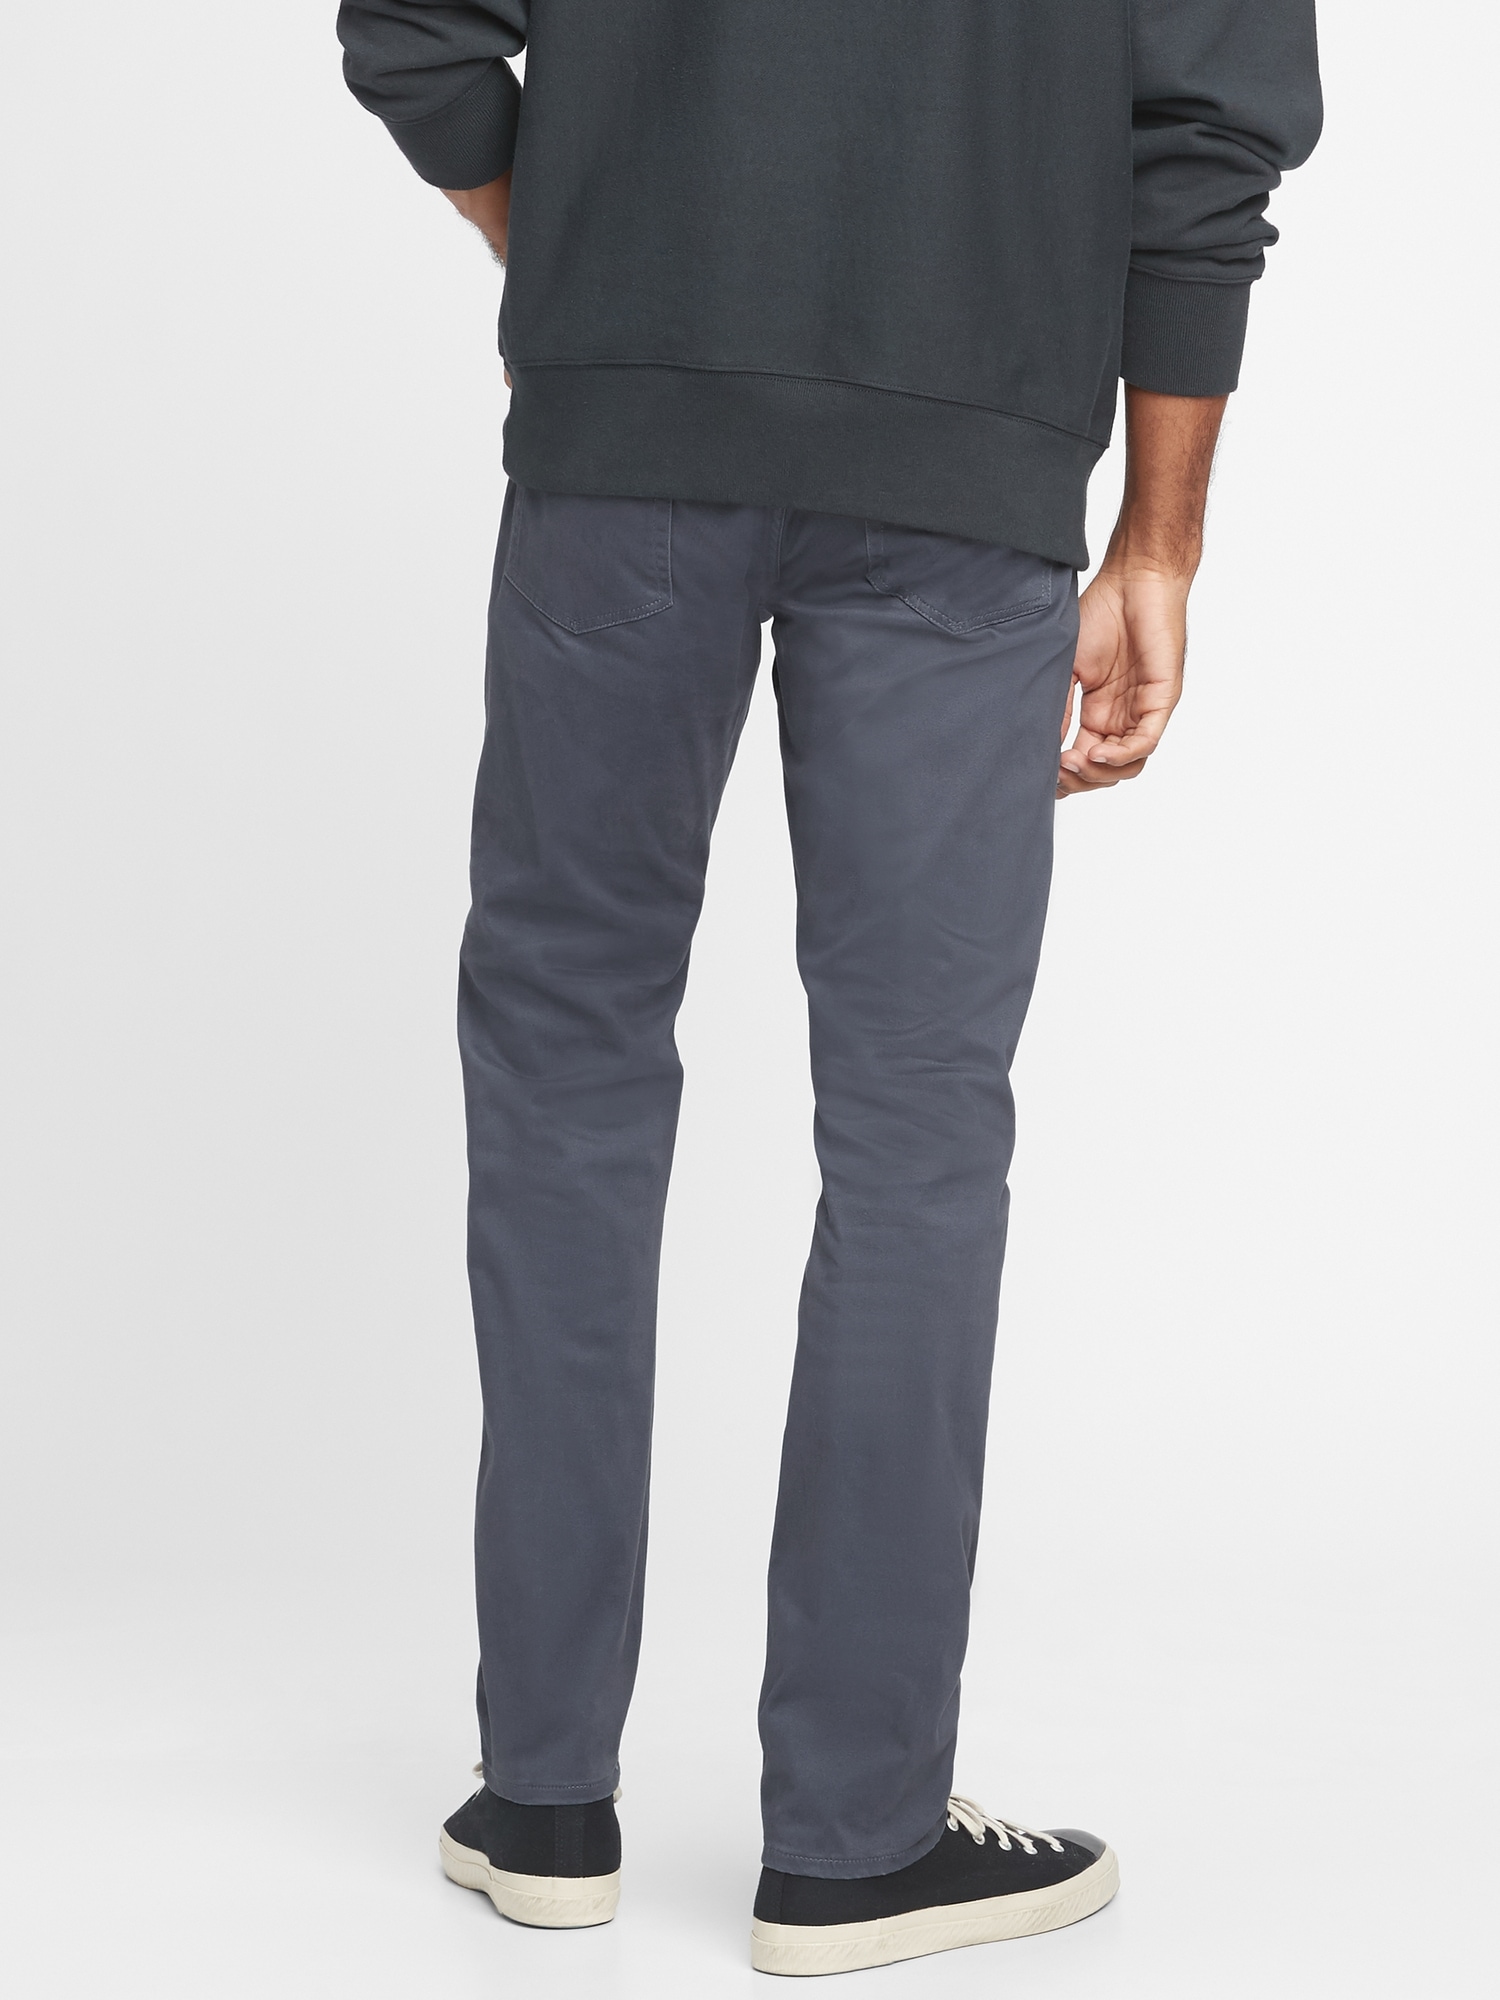 Gap Soft Wear Slim Jeans With Gapflex - ShopStyle